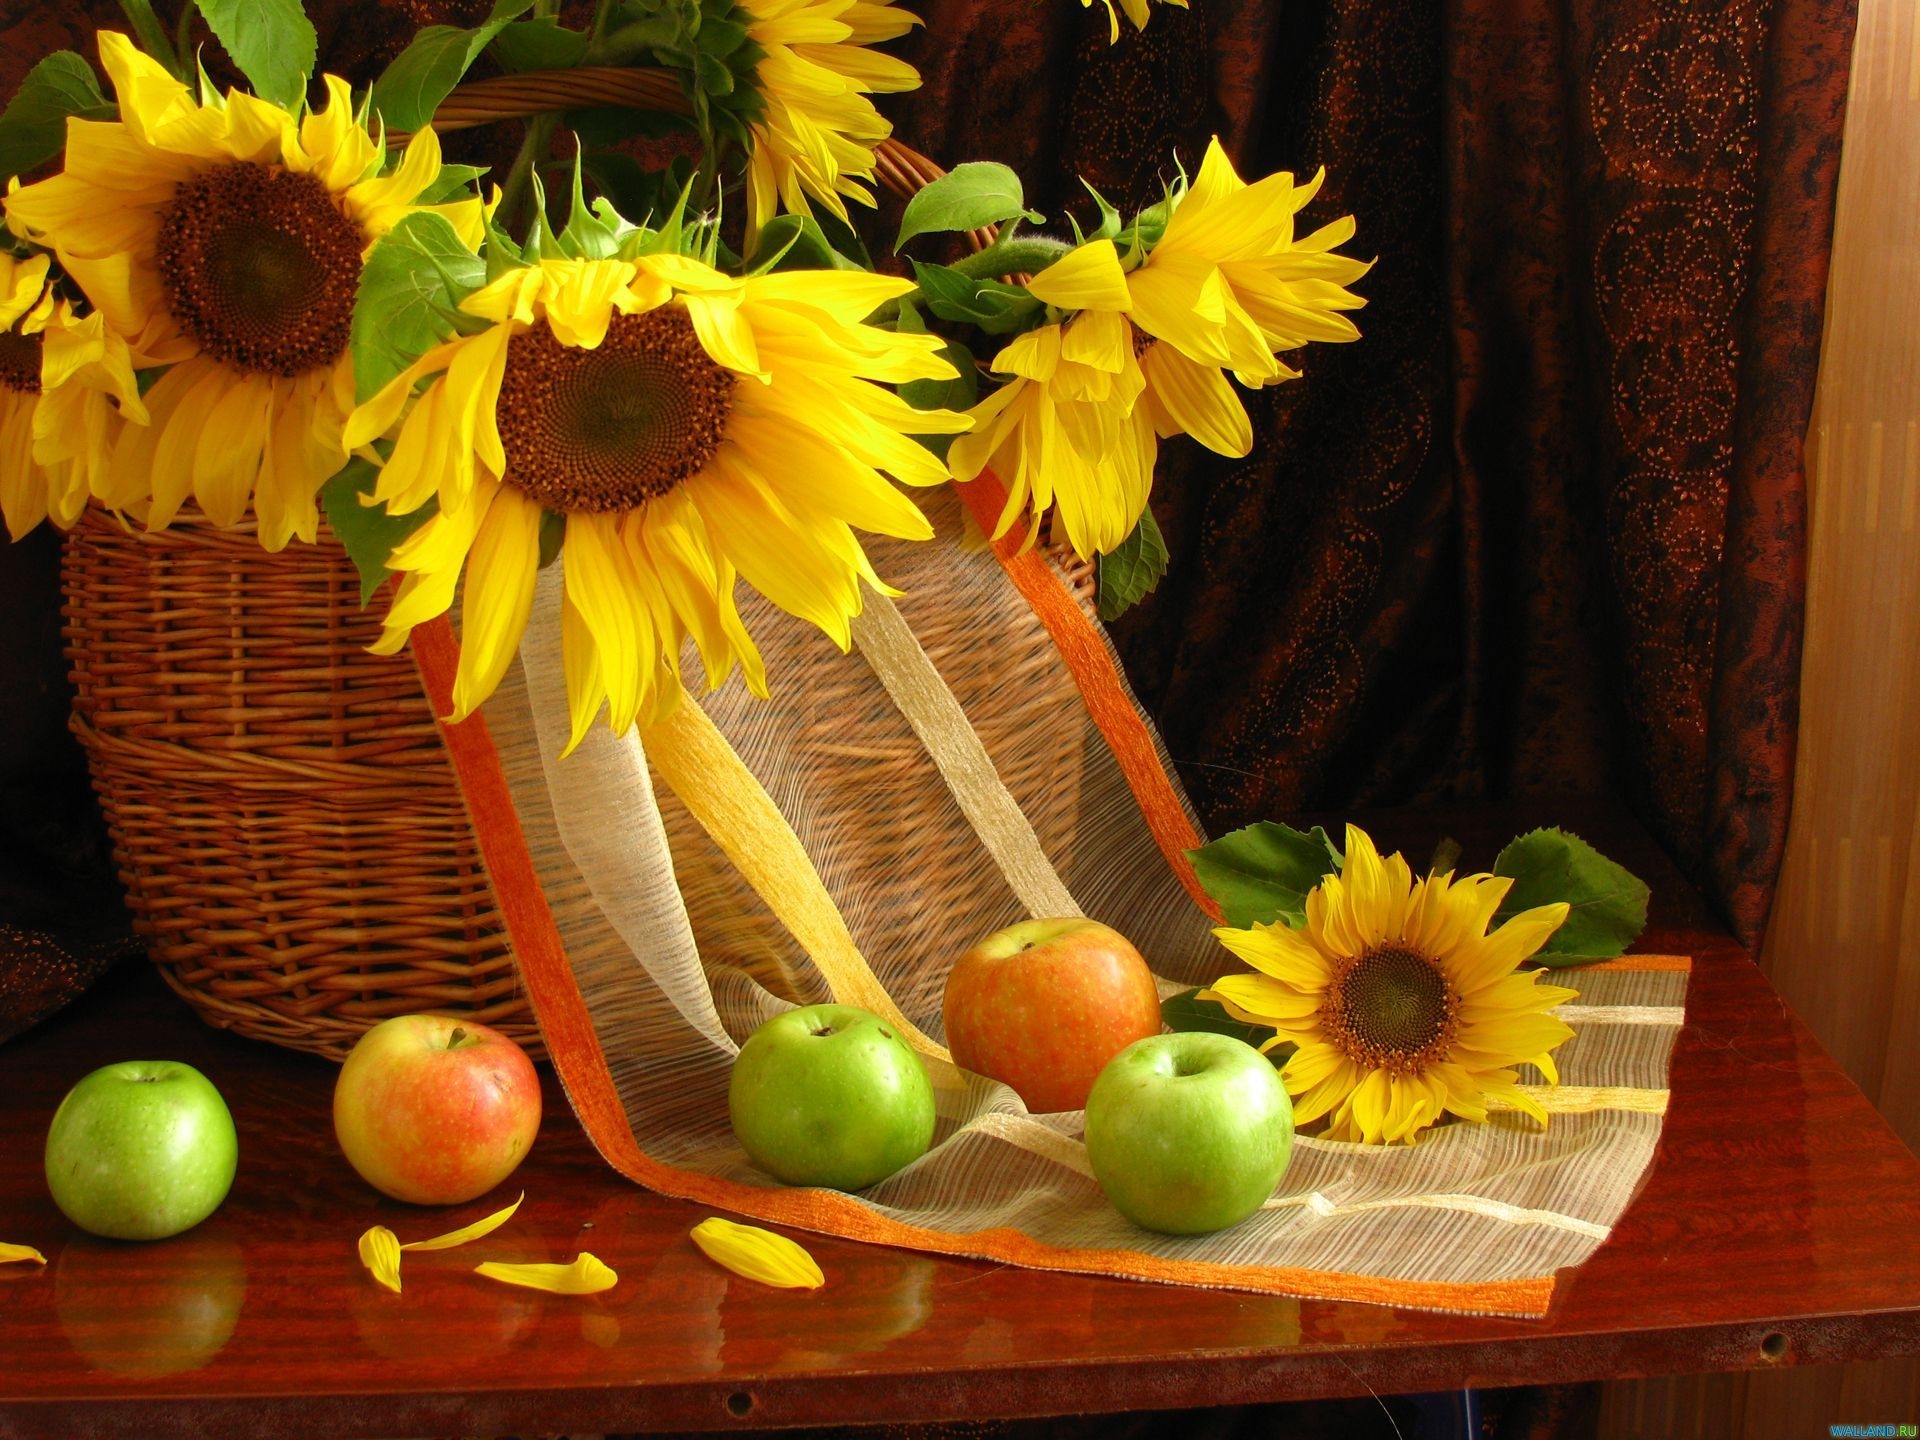 flowers, still life, sunflowers, leaves, apples, table, basket, curtains